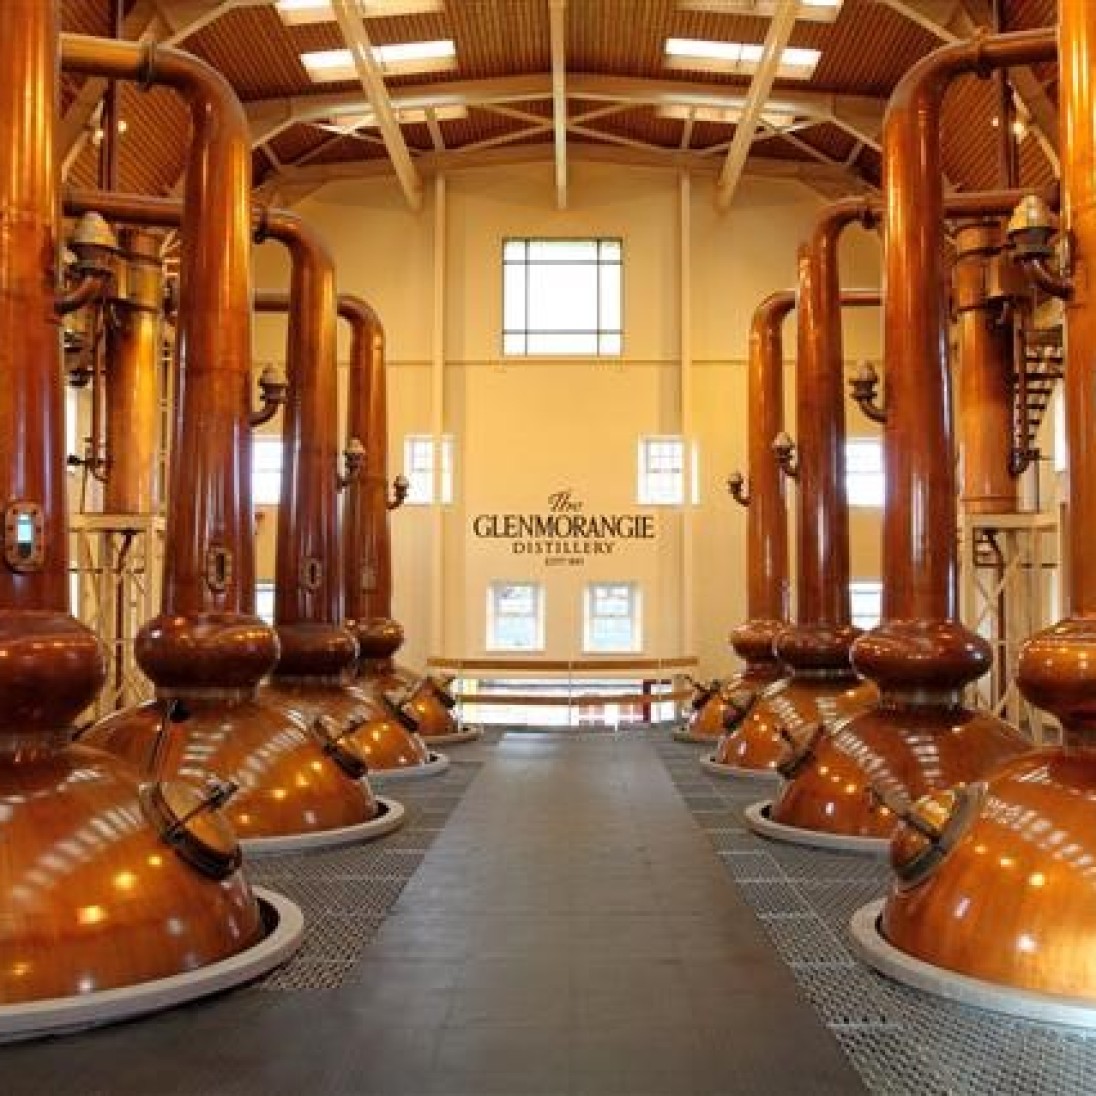 Glenmorangie distillery, internet photo